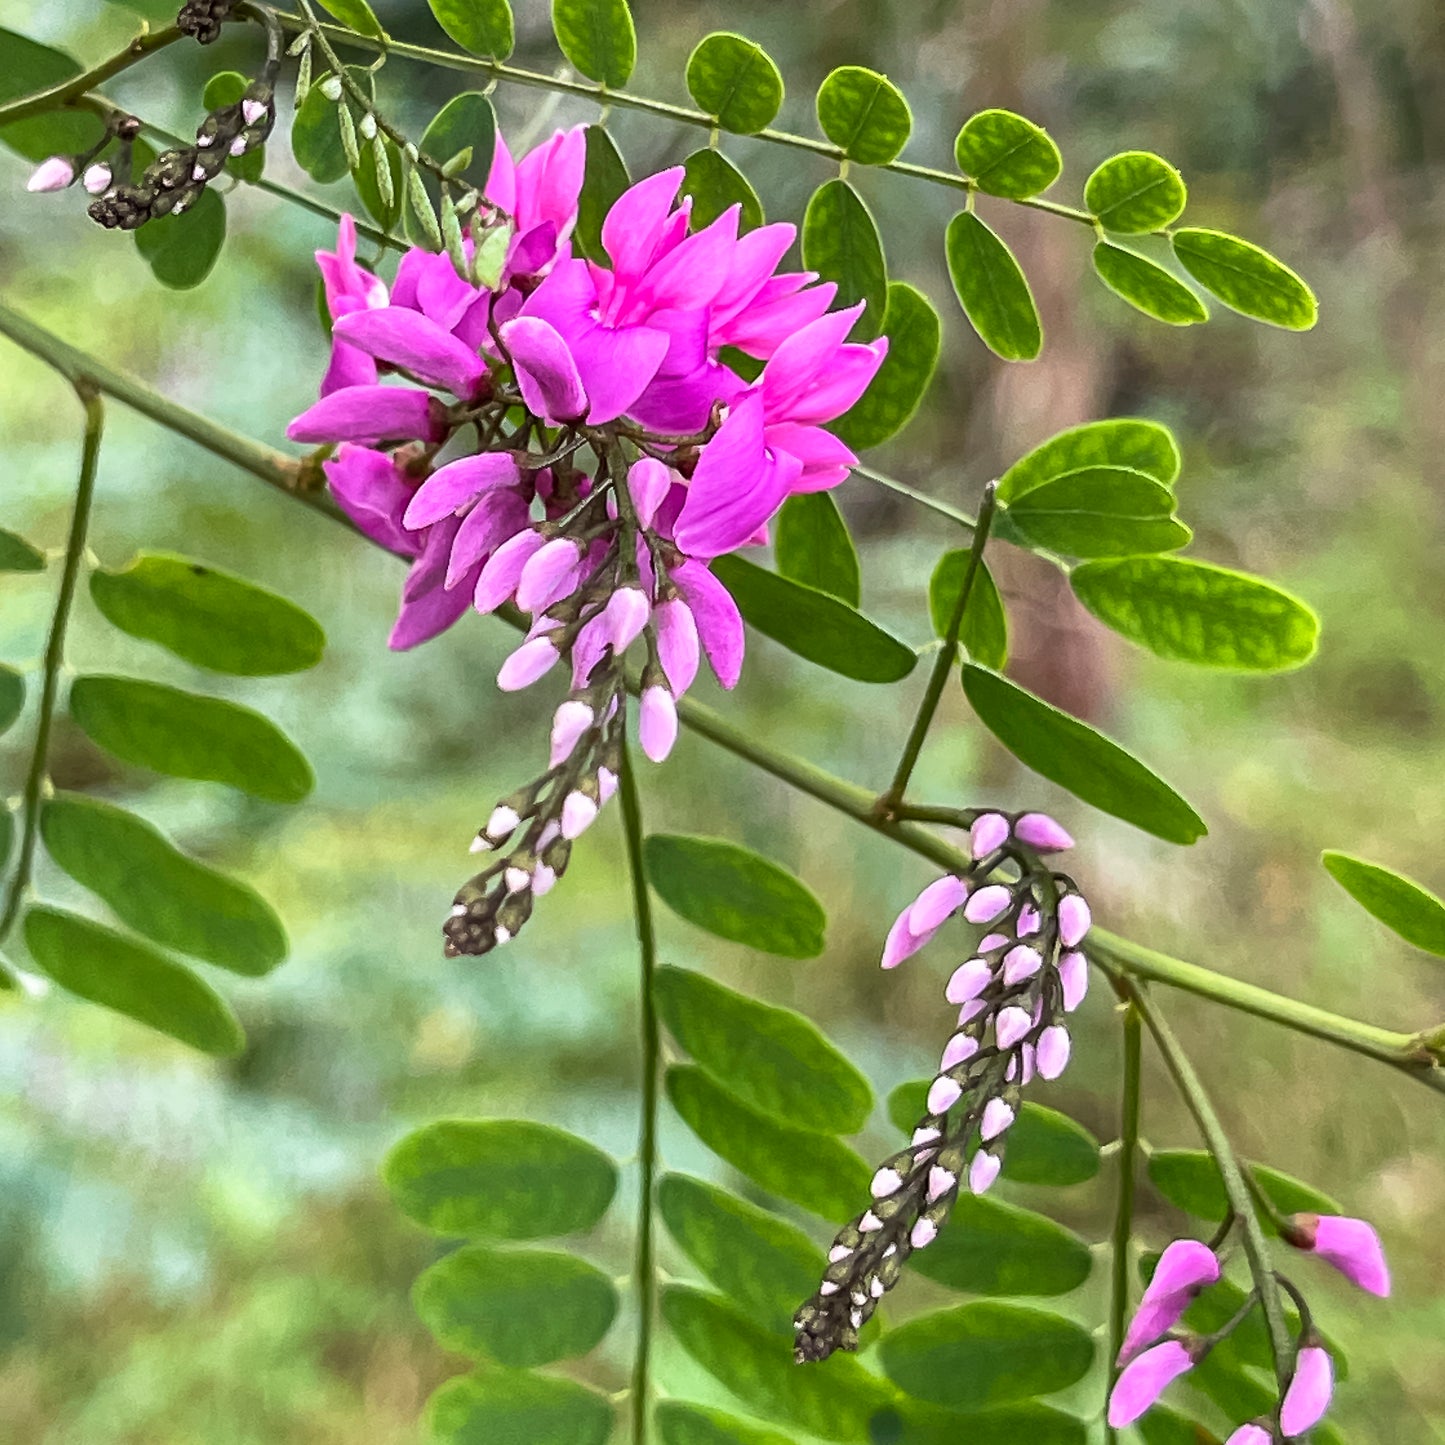 Close up of the purple flower on the Indigofera australis